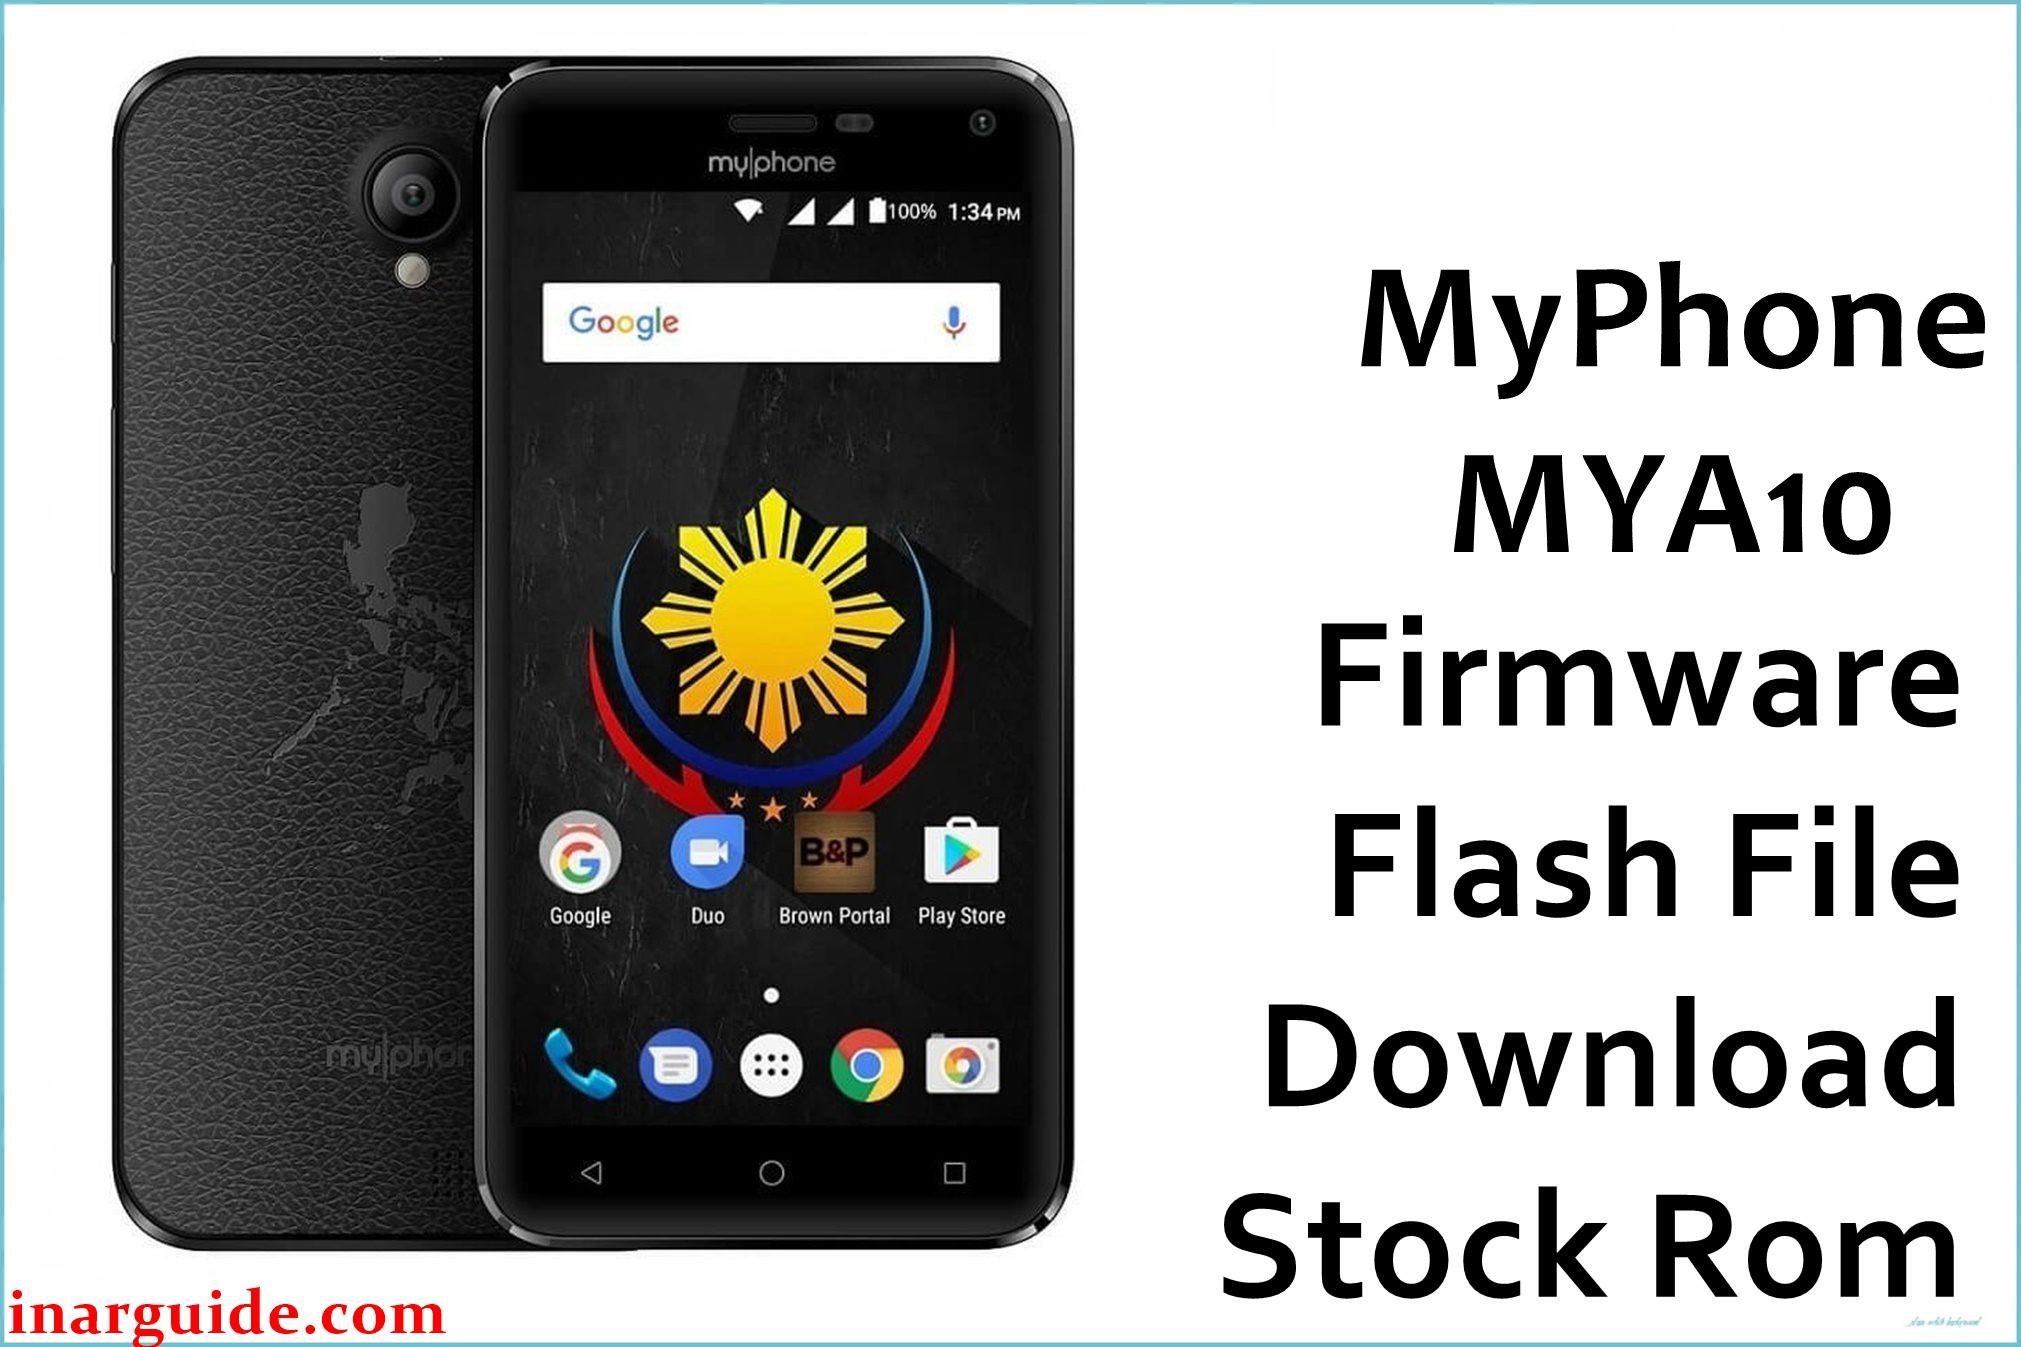 MyPhone MYA10